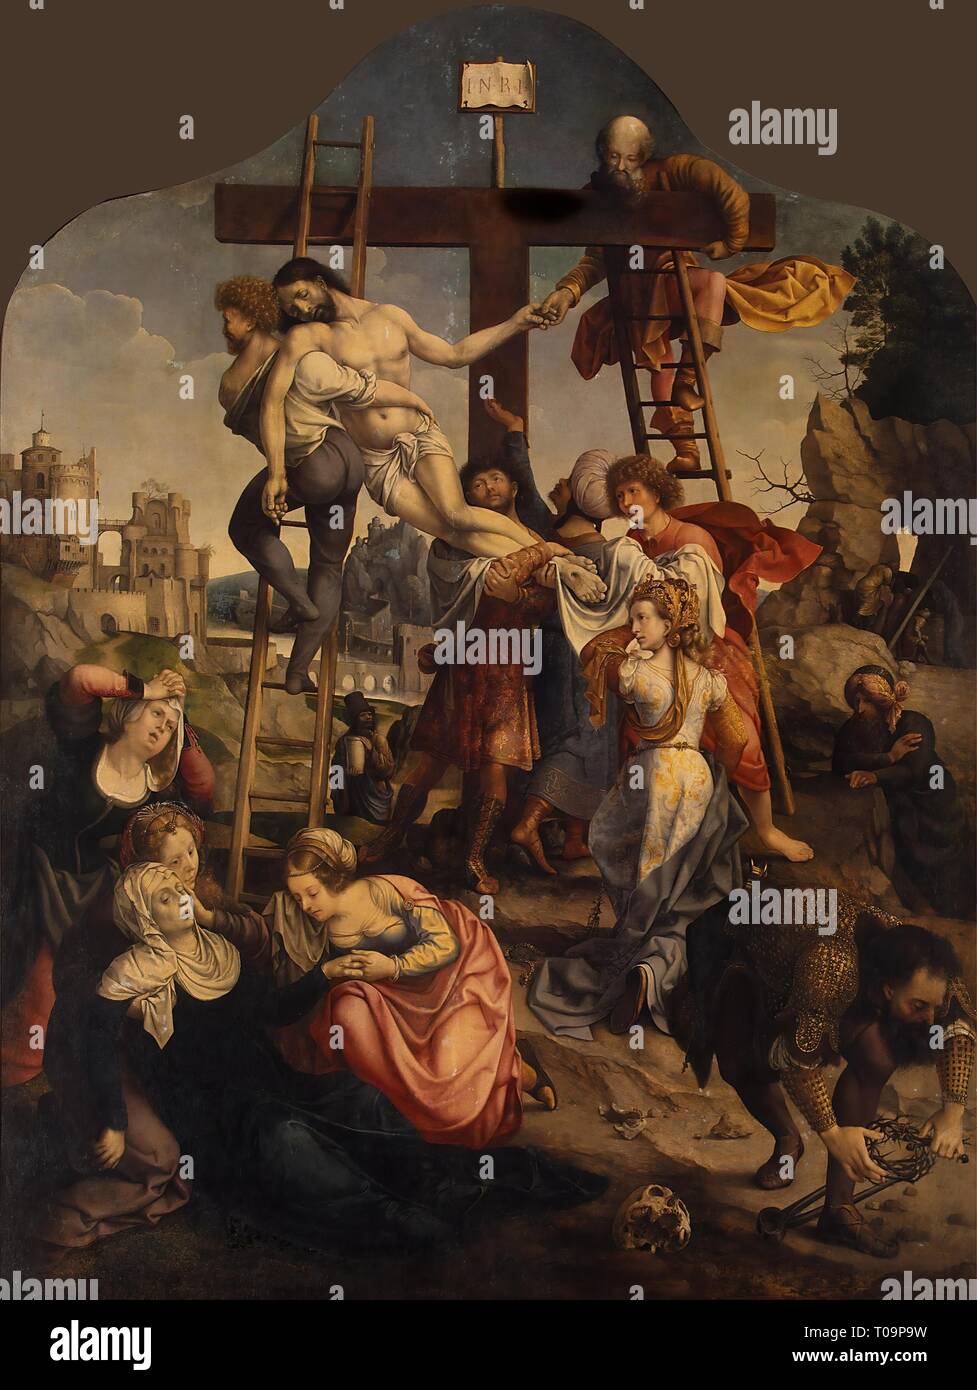 'Descent from the Cross'. Netherlands, Circa 1520. Dimensions: 141x106,5 cm. Museum: State Hermitage, St. Petersburg. Author: Jan Gossaert (Mabuse). JAN GOSSAERT. Stock Photo